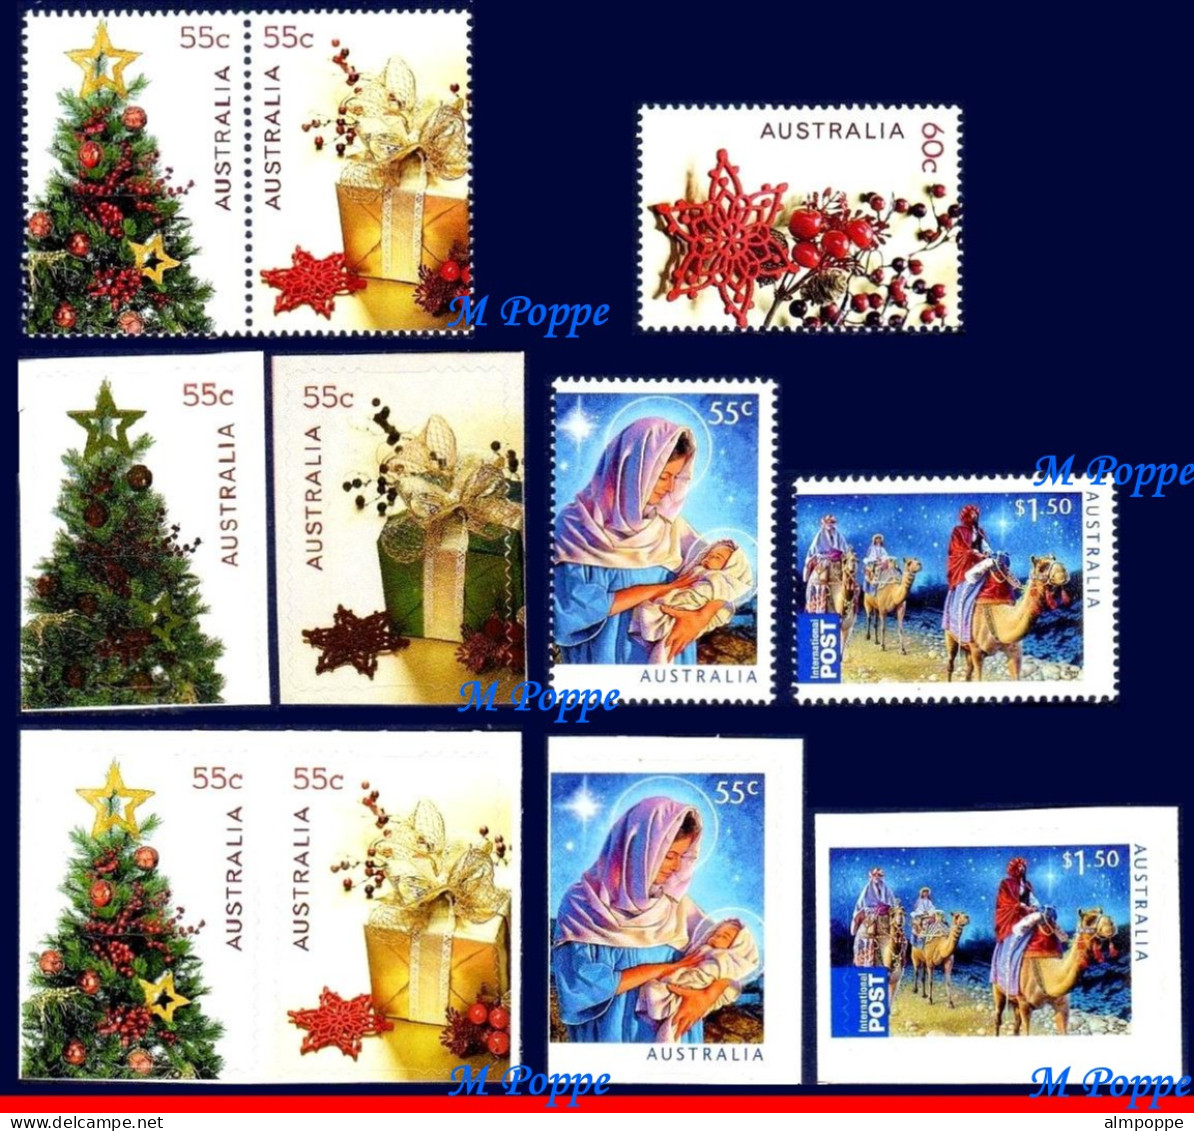 Ref. AU-V2011-04 AUSTRALIA 2011 - RELIGIONSET COMPLETE - MINT MNH, CHRISTMAS 11V - Mint Stamps